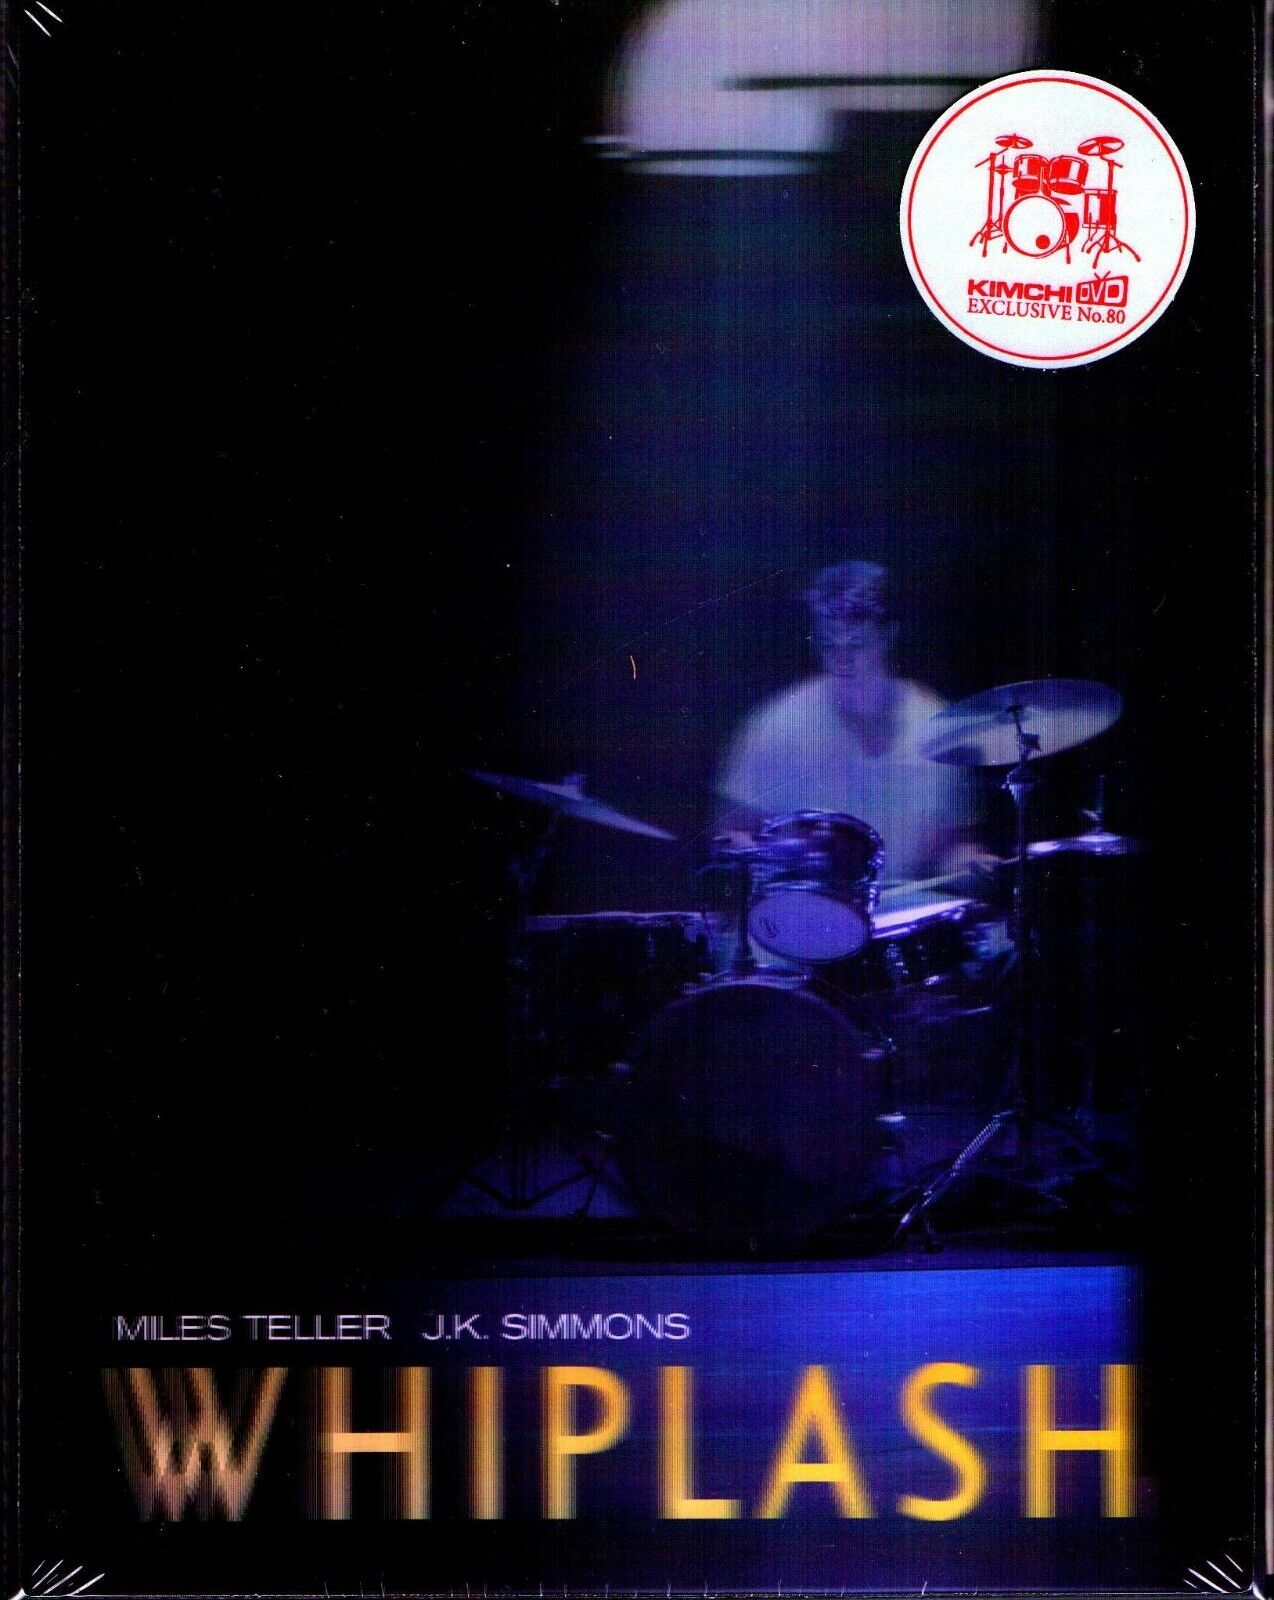 Whiplash 4K 1-Click SteelBook (KE#80)(Korea)